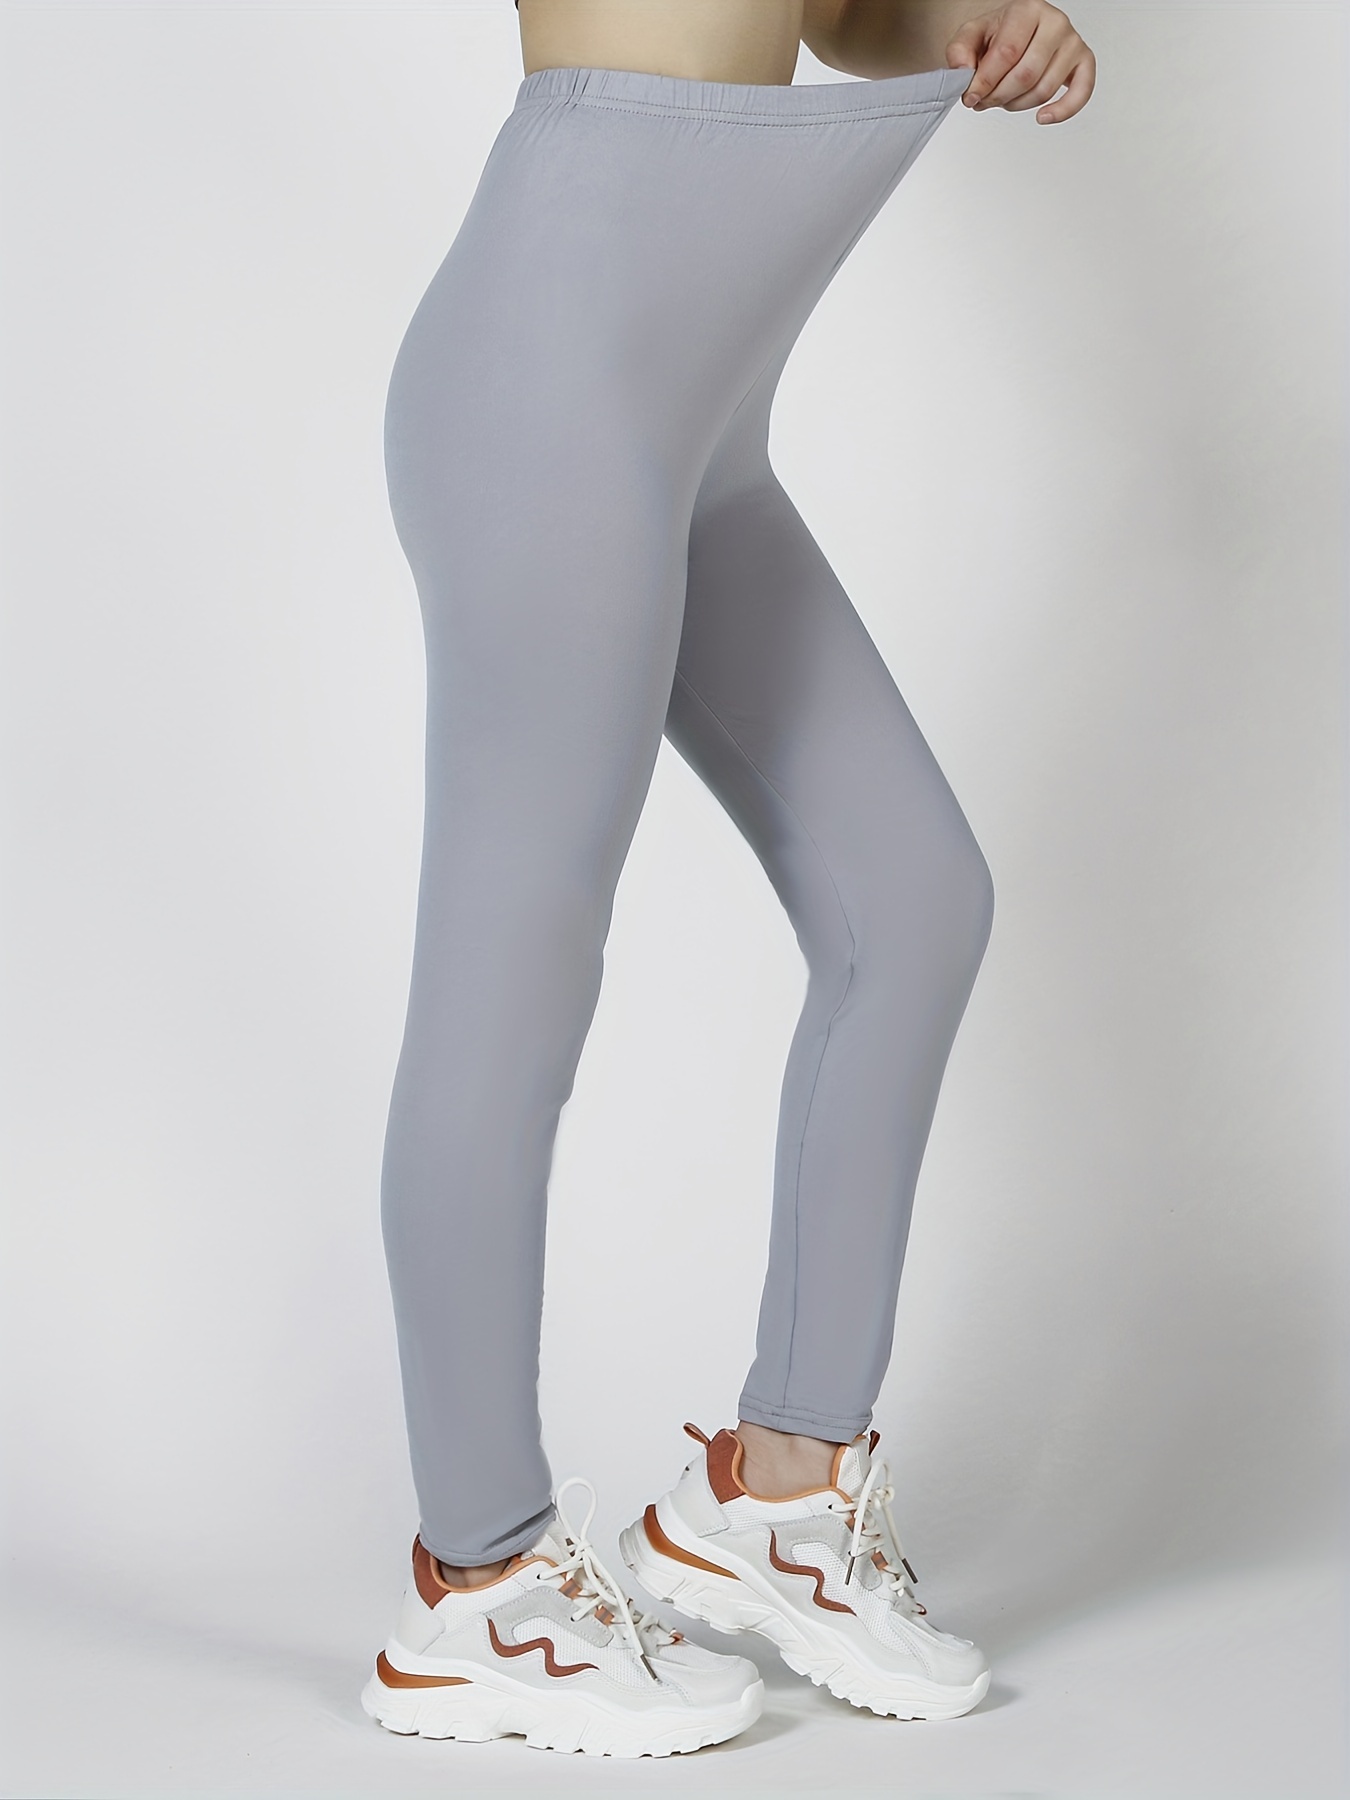 Stylish Nike Light Grey Leggings - Size Small